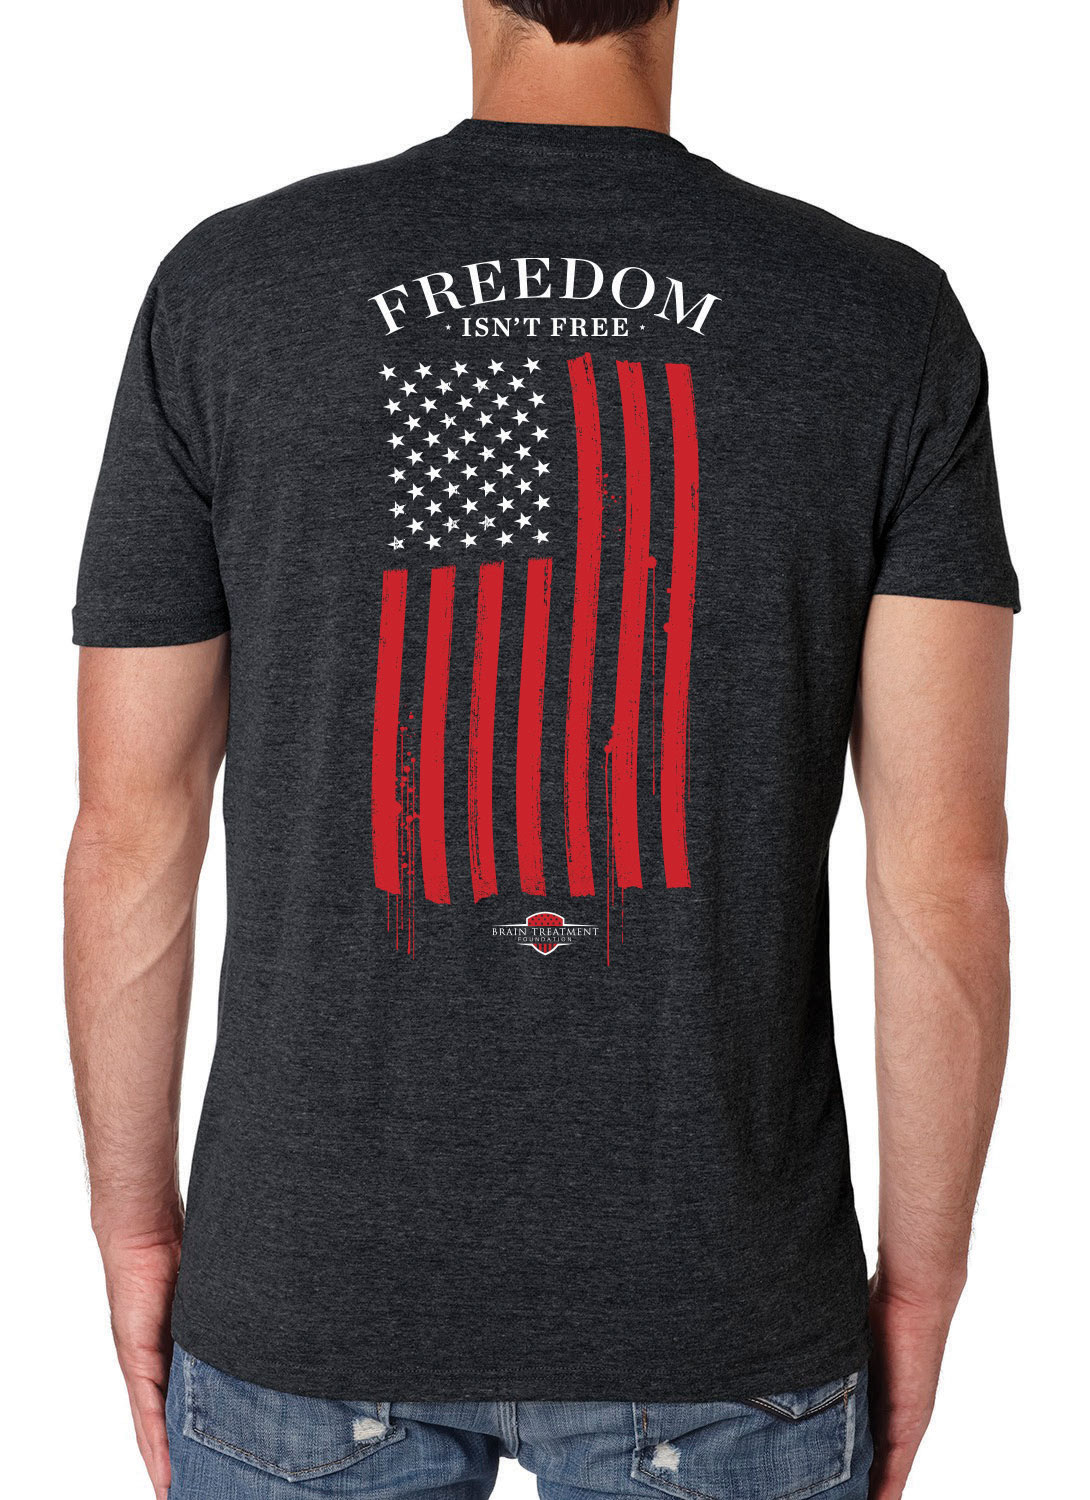 Freedom Isn't Free Men's Black T-Shirt (back)